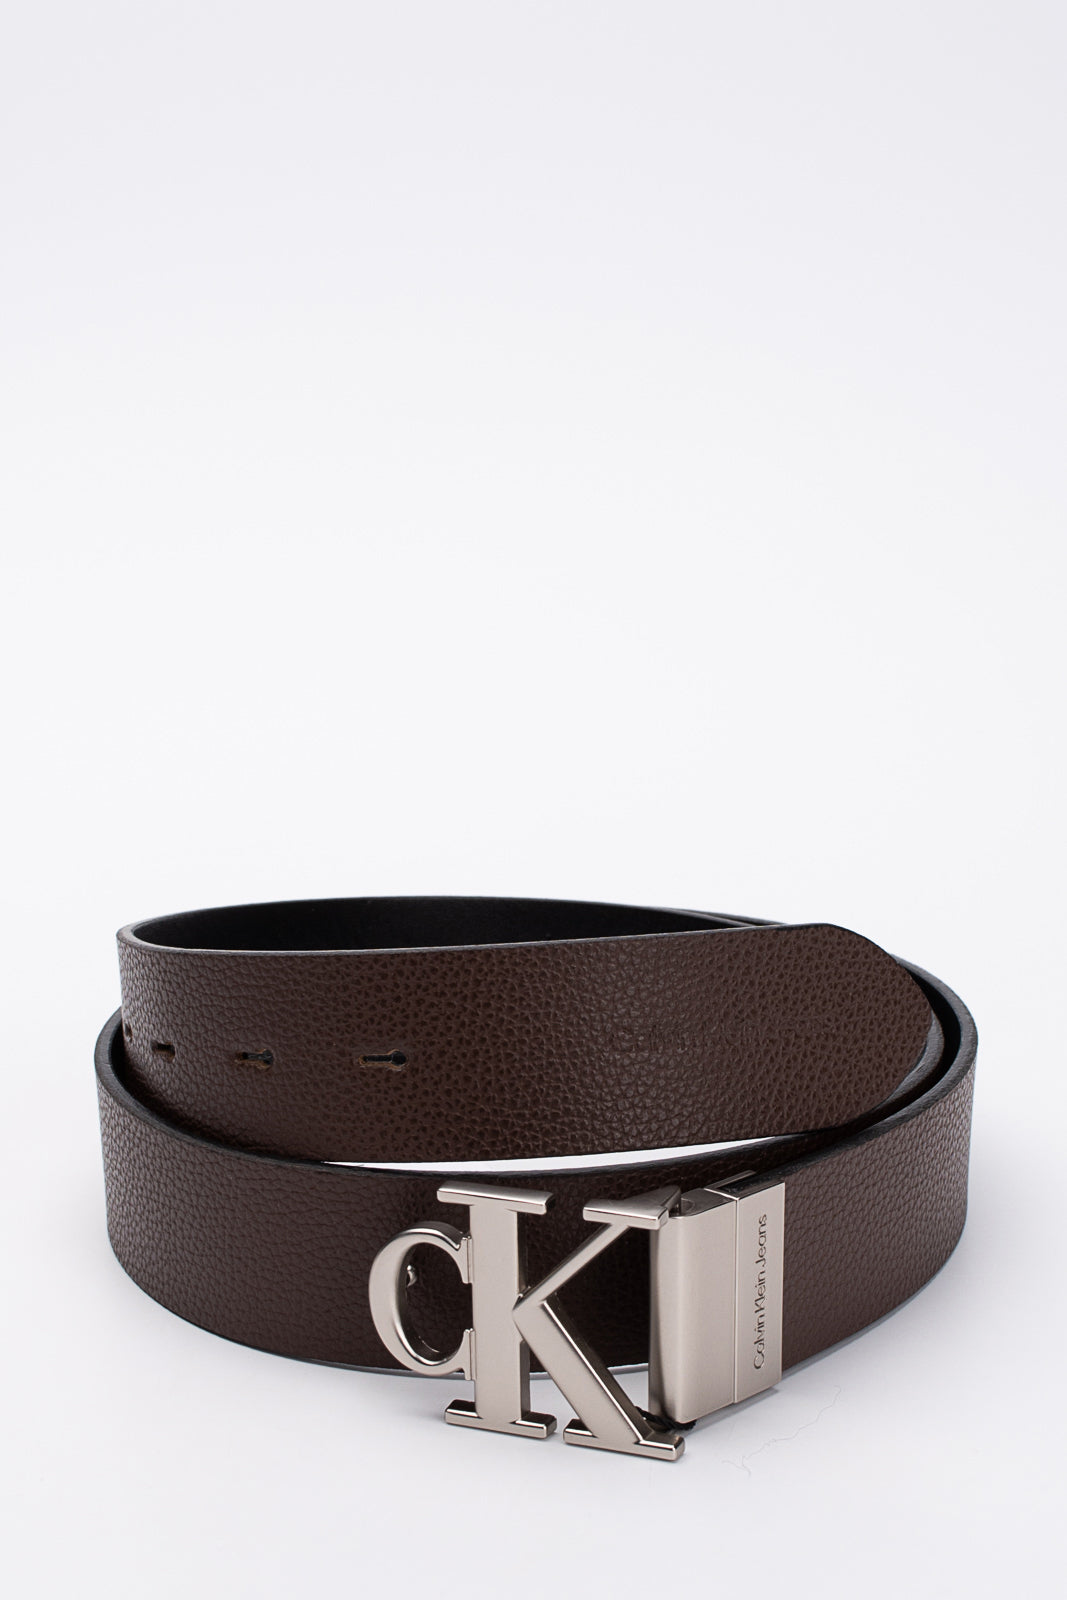 CK JEANS KLEIN –POPPRI CALVIN Auctions Leather Reversible Grainy Belt Size Fashion 85/34 Panel Online